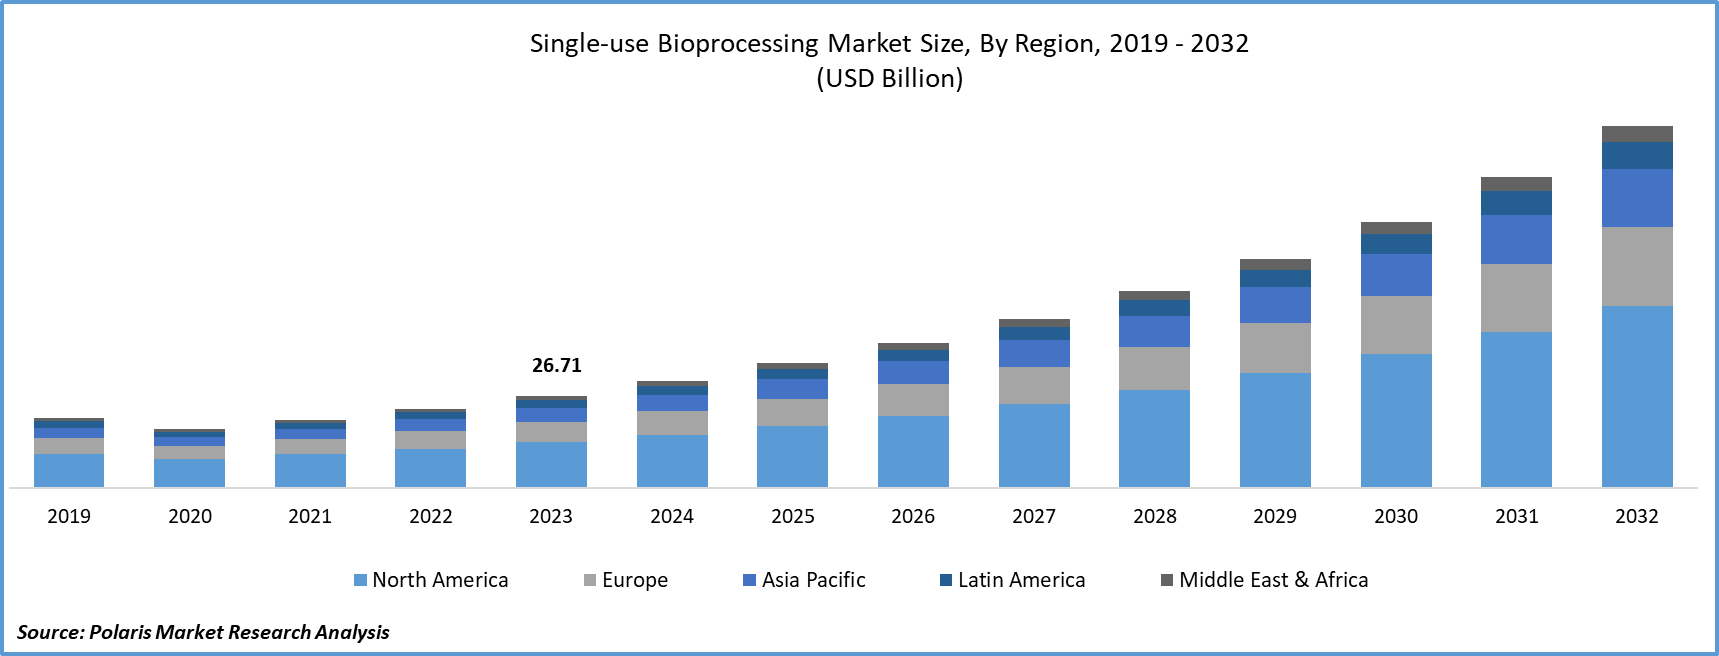 Single-use Bioprocessing Market Size